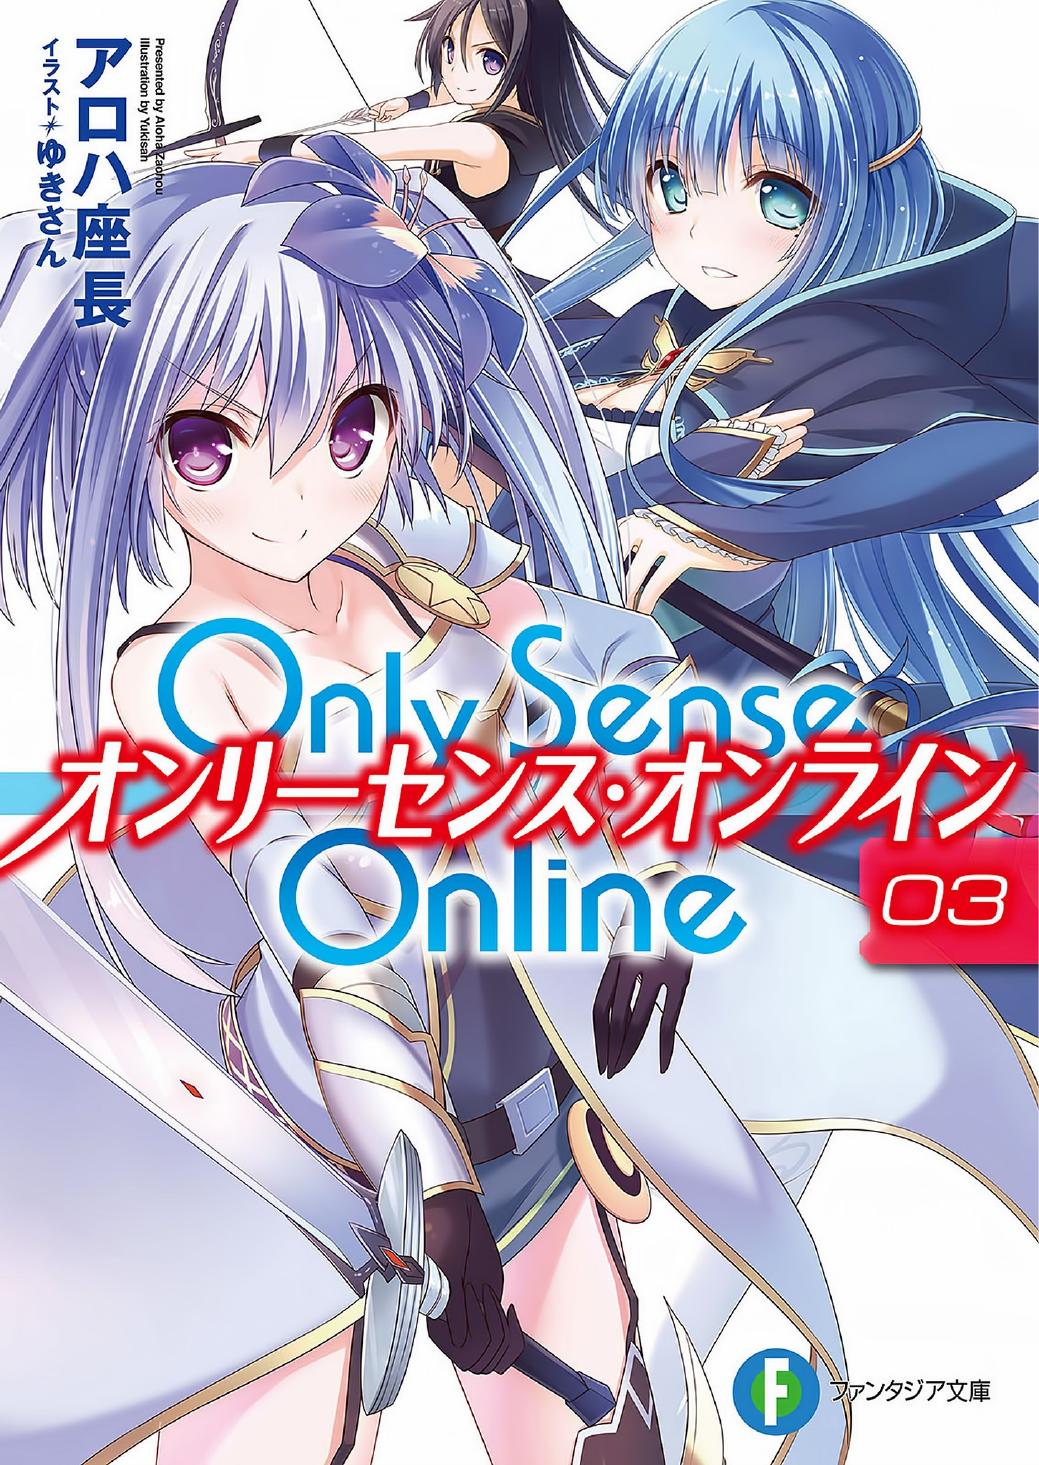 Only Sense Online #003